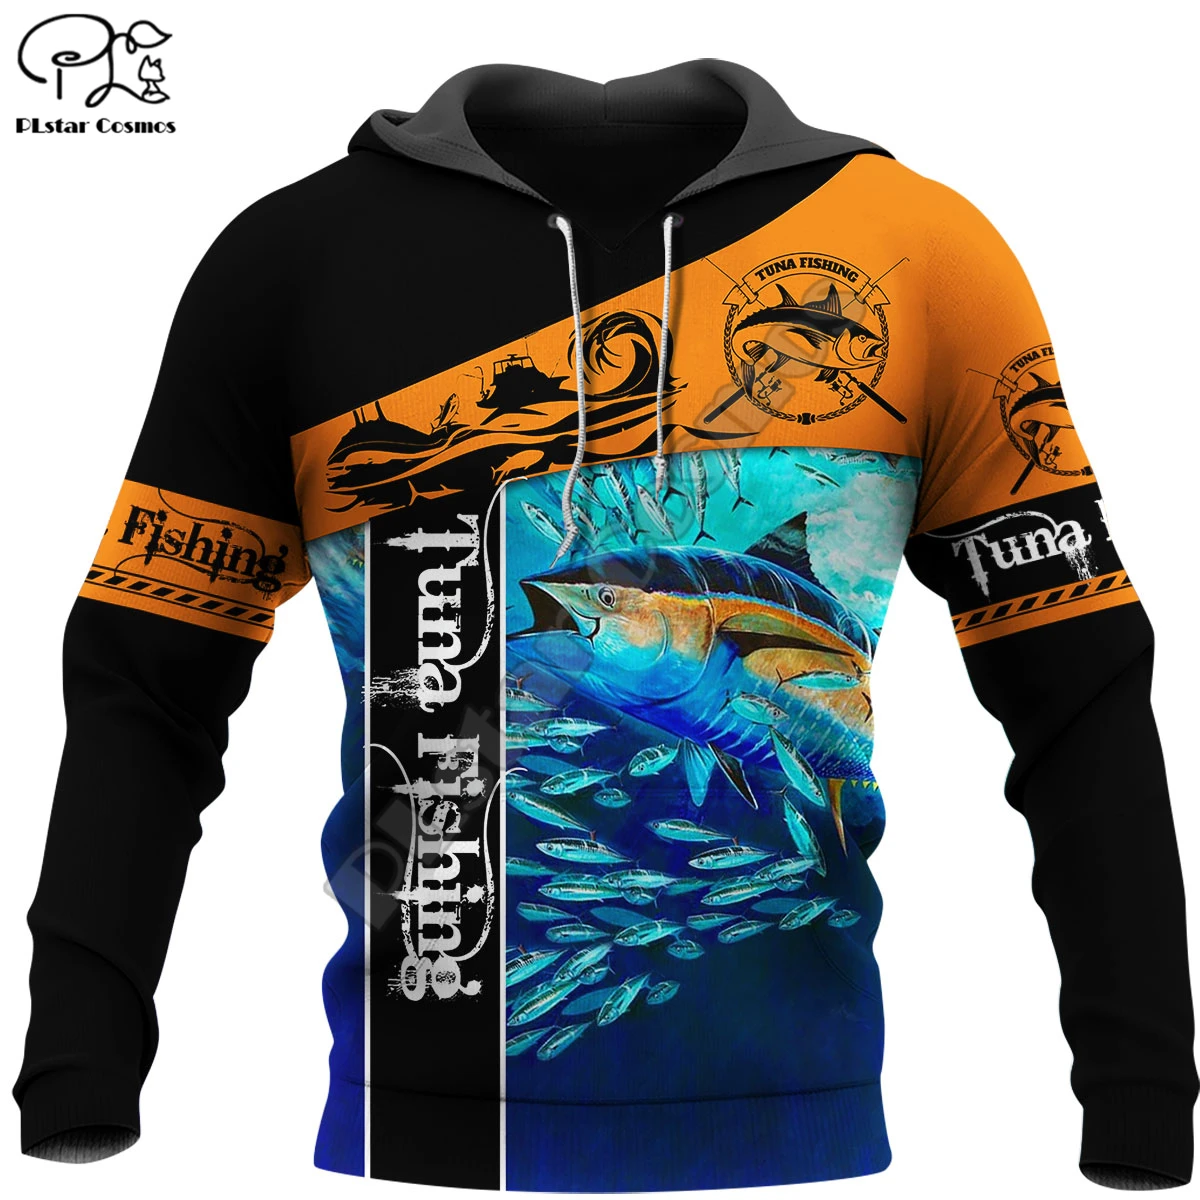 

PLstar Cosmos Tuna Fishing Fashion Men's Sweatshirt Beautiful Animal 3D Print Harajuku Jacket Funny Fish Casual Hoodie Style-1